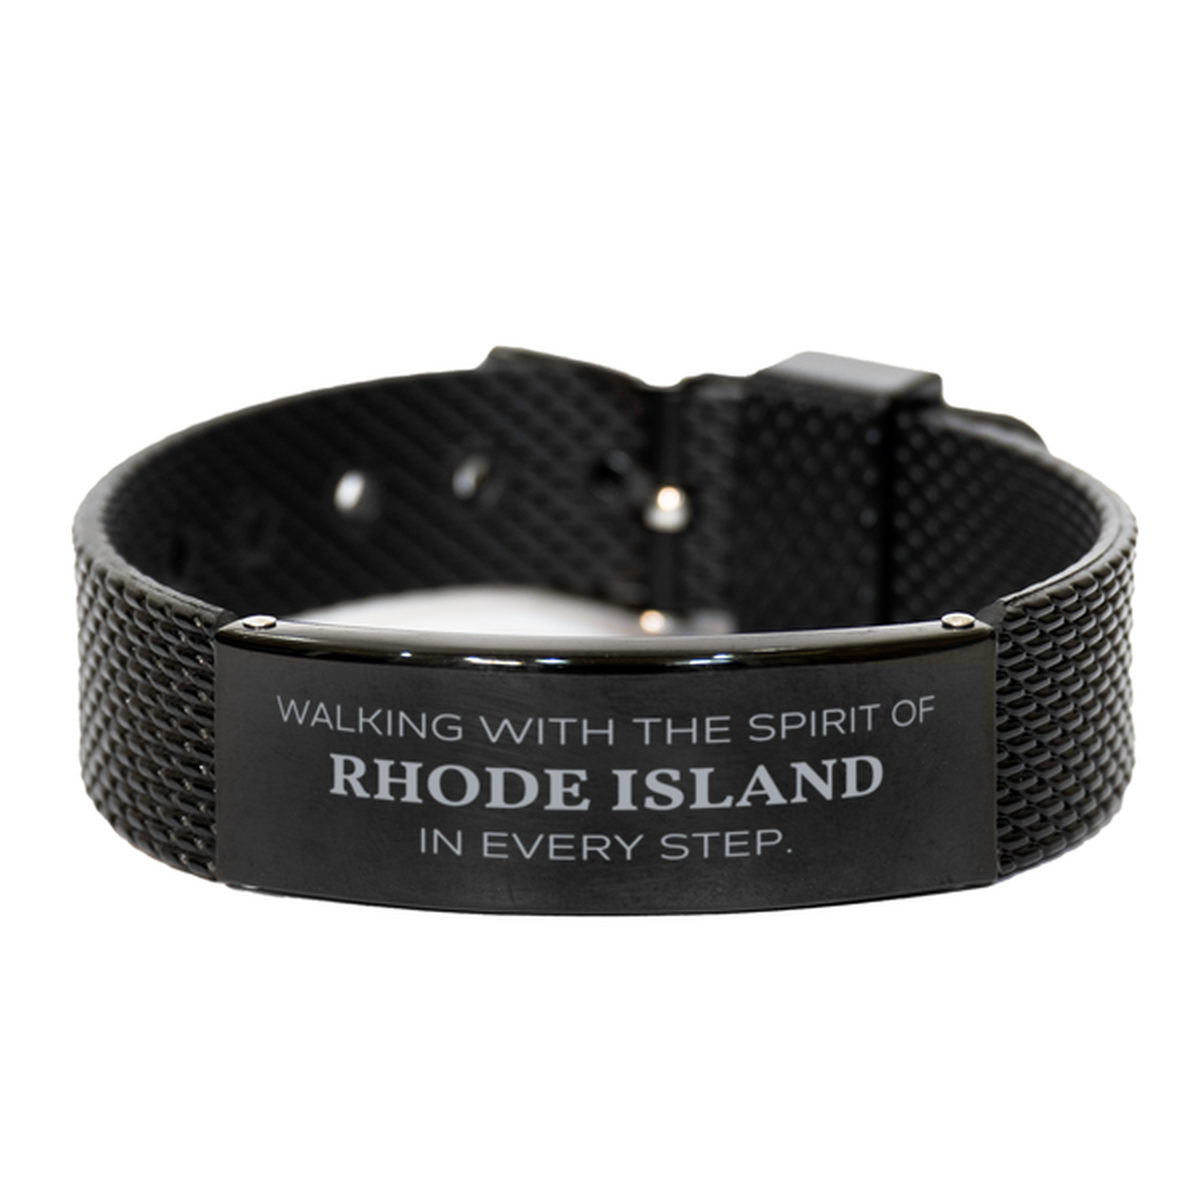 Rhode Island Gifts, Walking with the spirit, Love Rhode Island Birthday Christmas Black Shark Mesh Bracelet For Rhode Island People, Men, Women, Friends